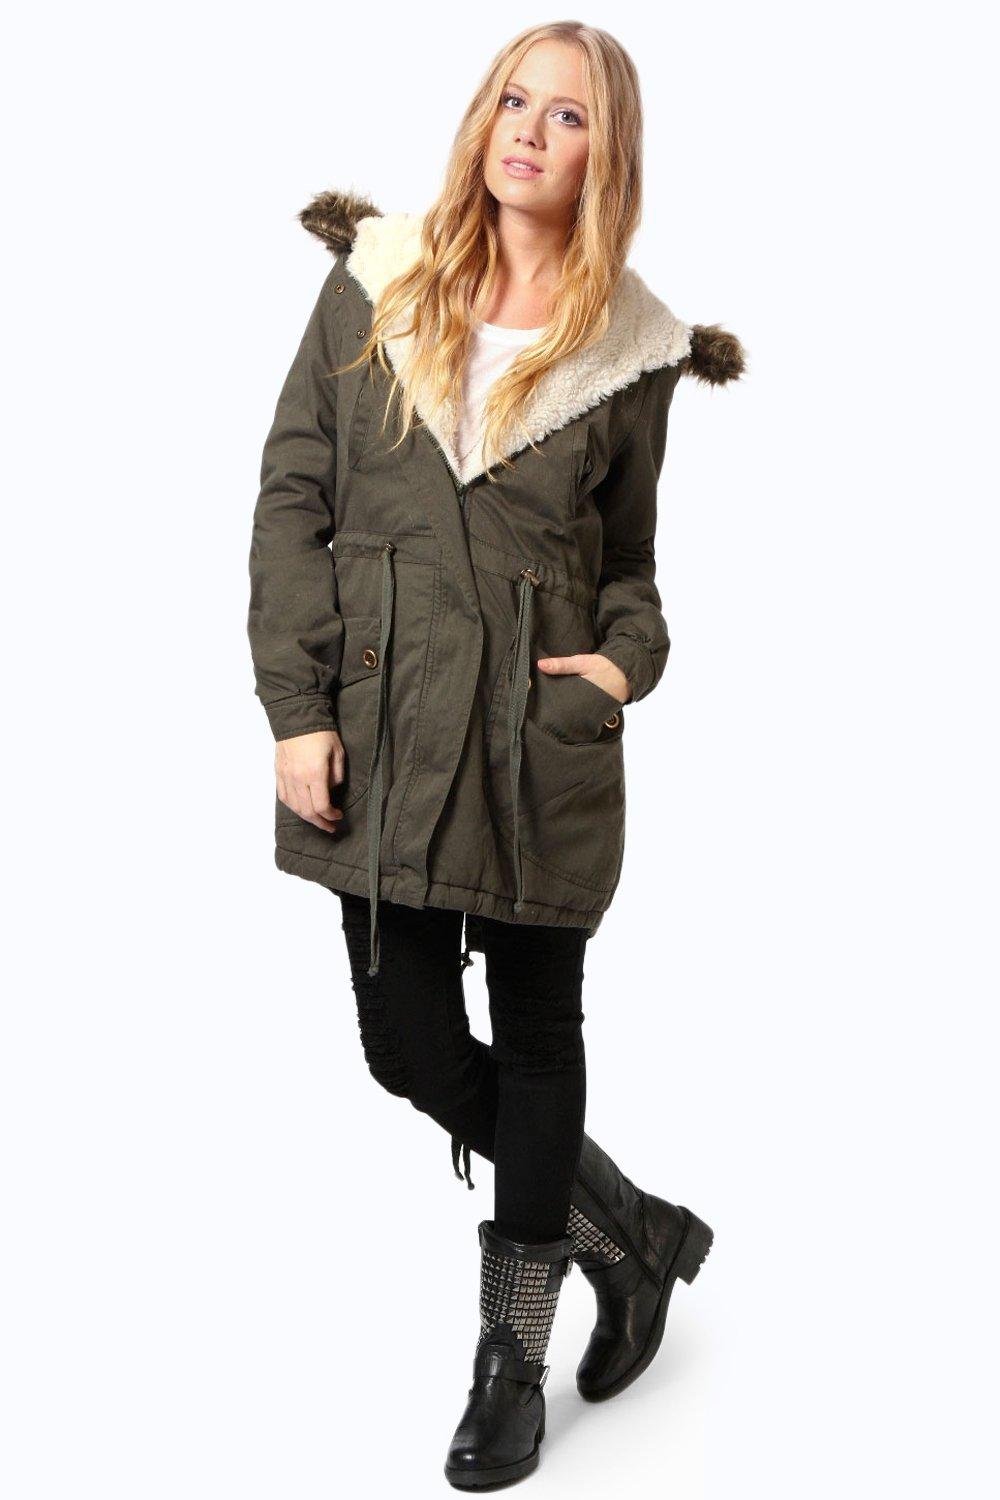 Boohoo Women's Coats Selection Multiple Colours & Sizes For Autumn ...